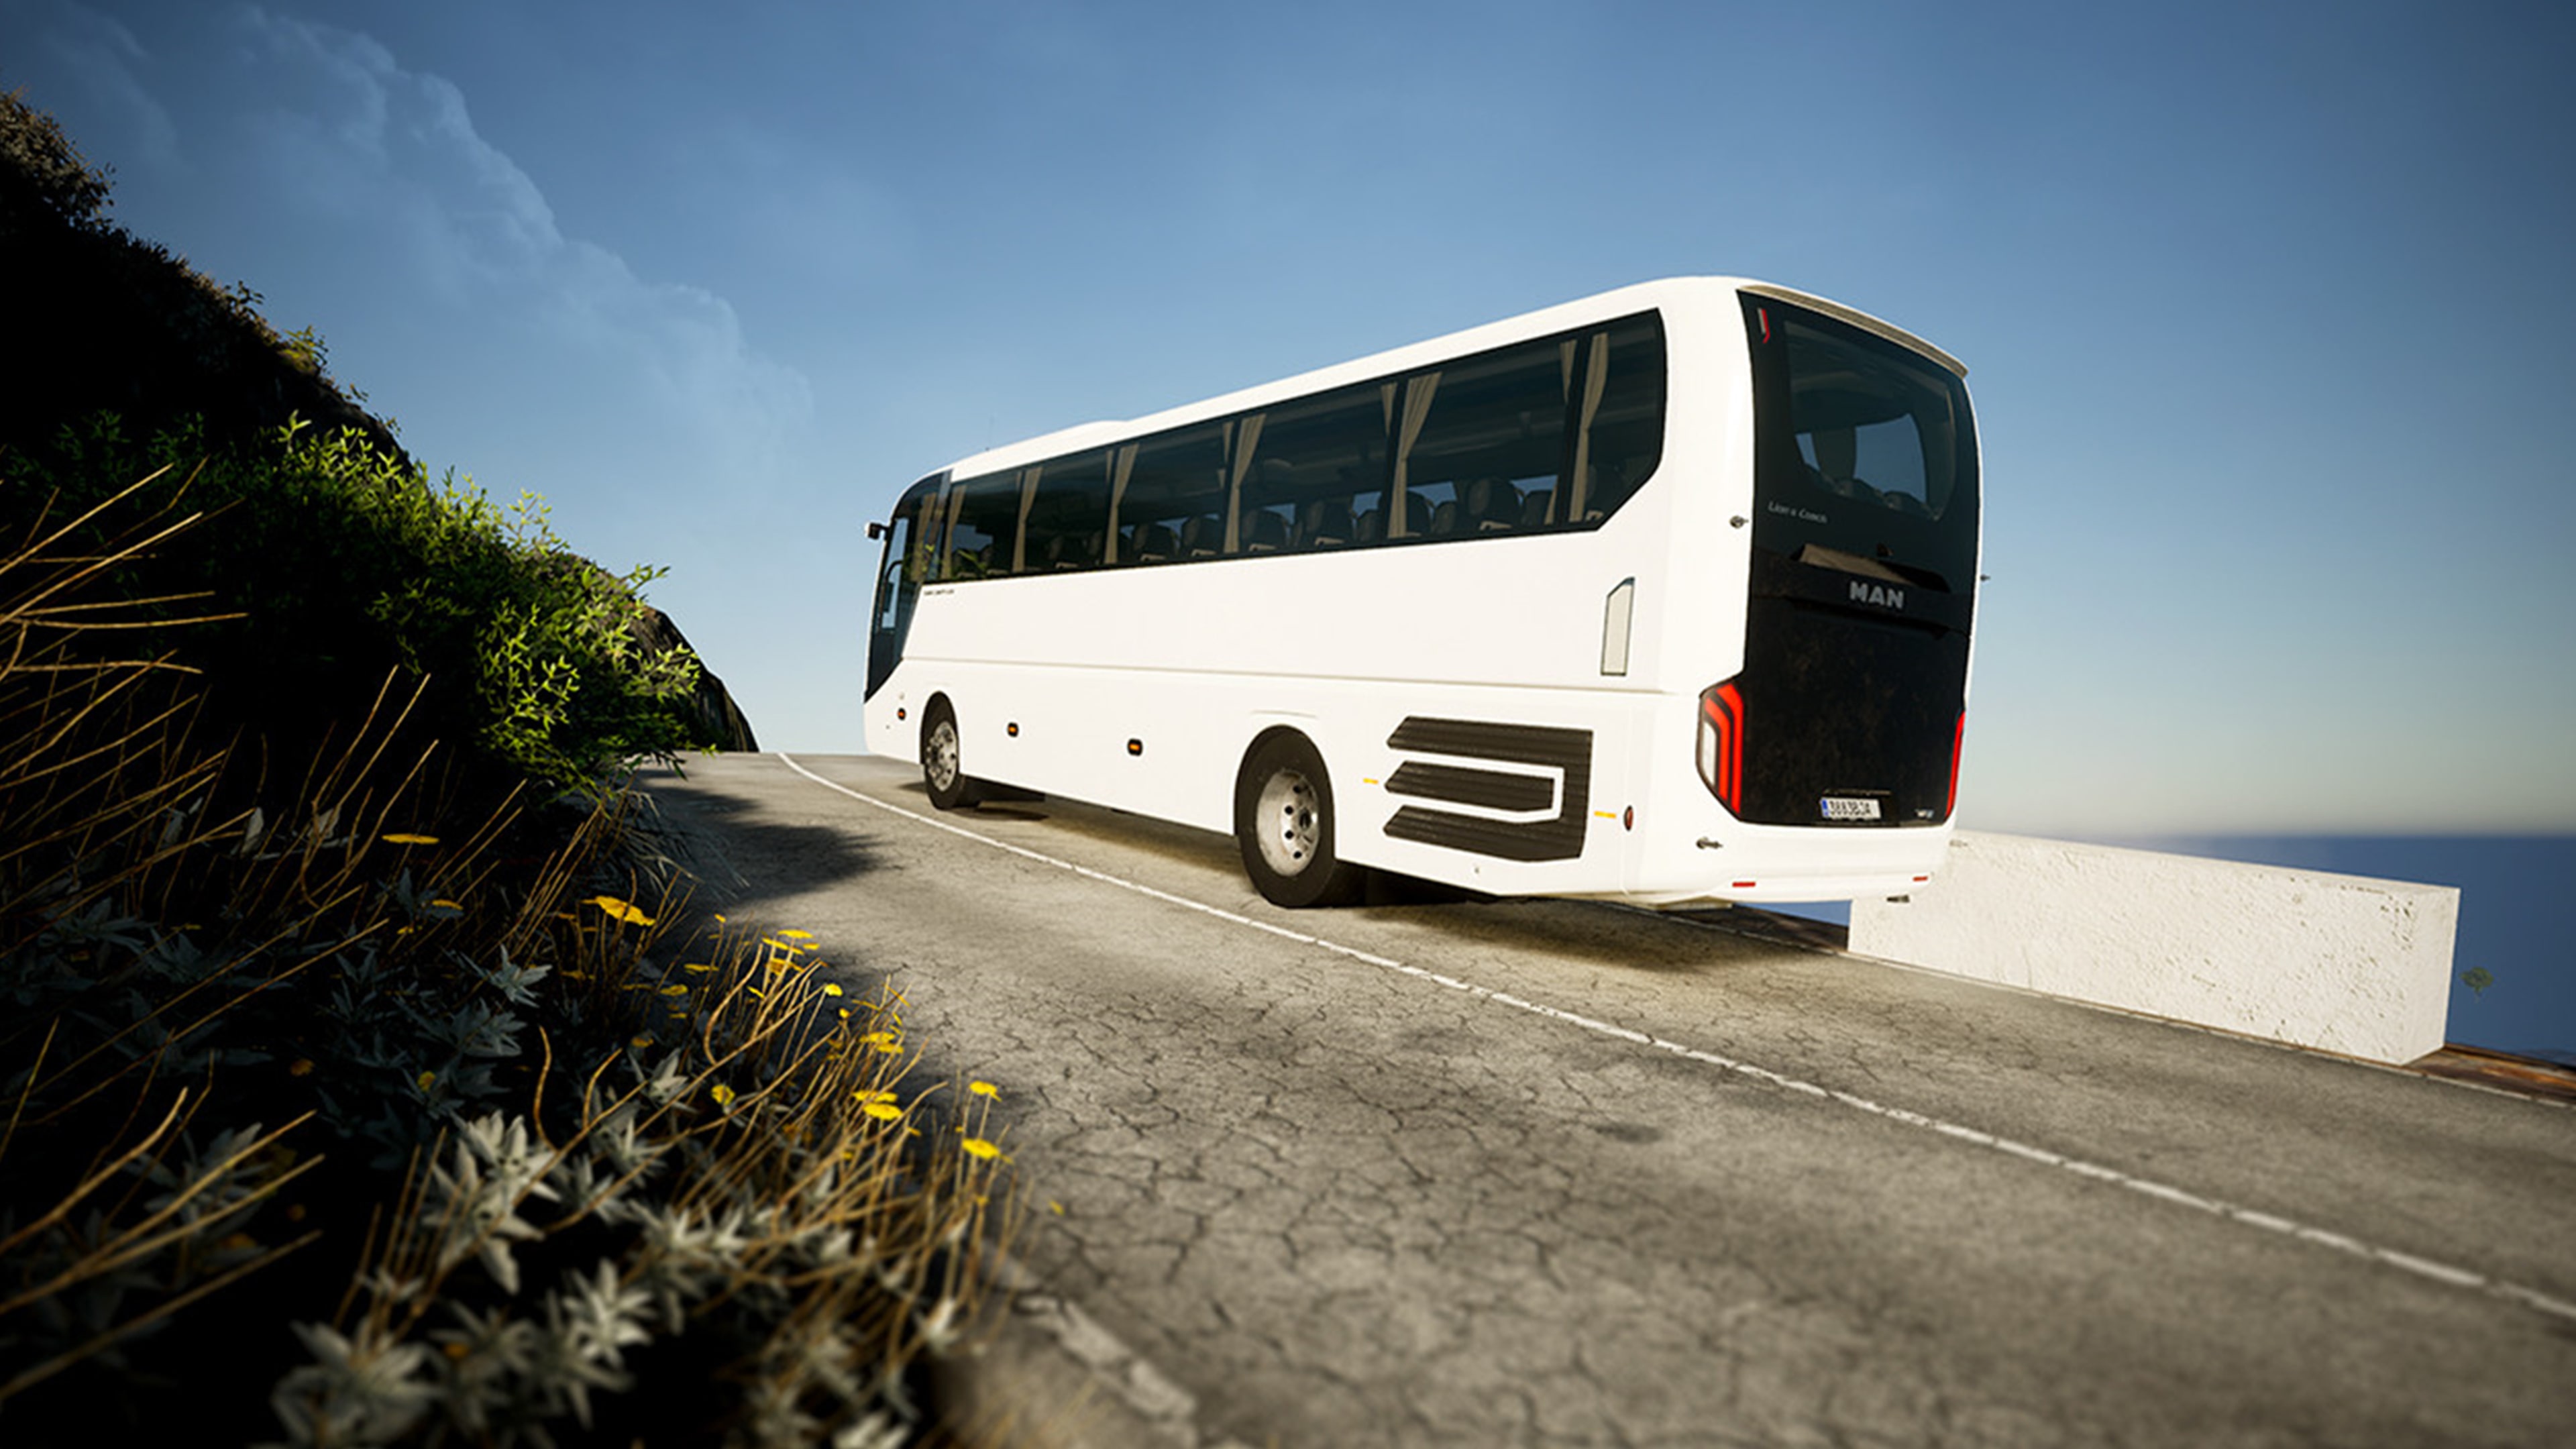 PS5 history, on — Bus • 2 Slovenia — Simulator price Bus discounts Pack screenshots, Tourist